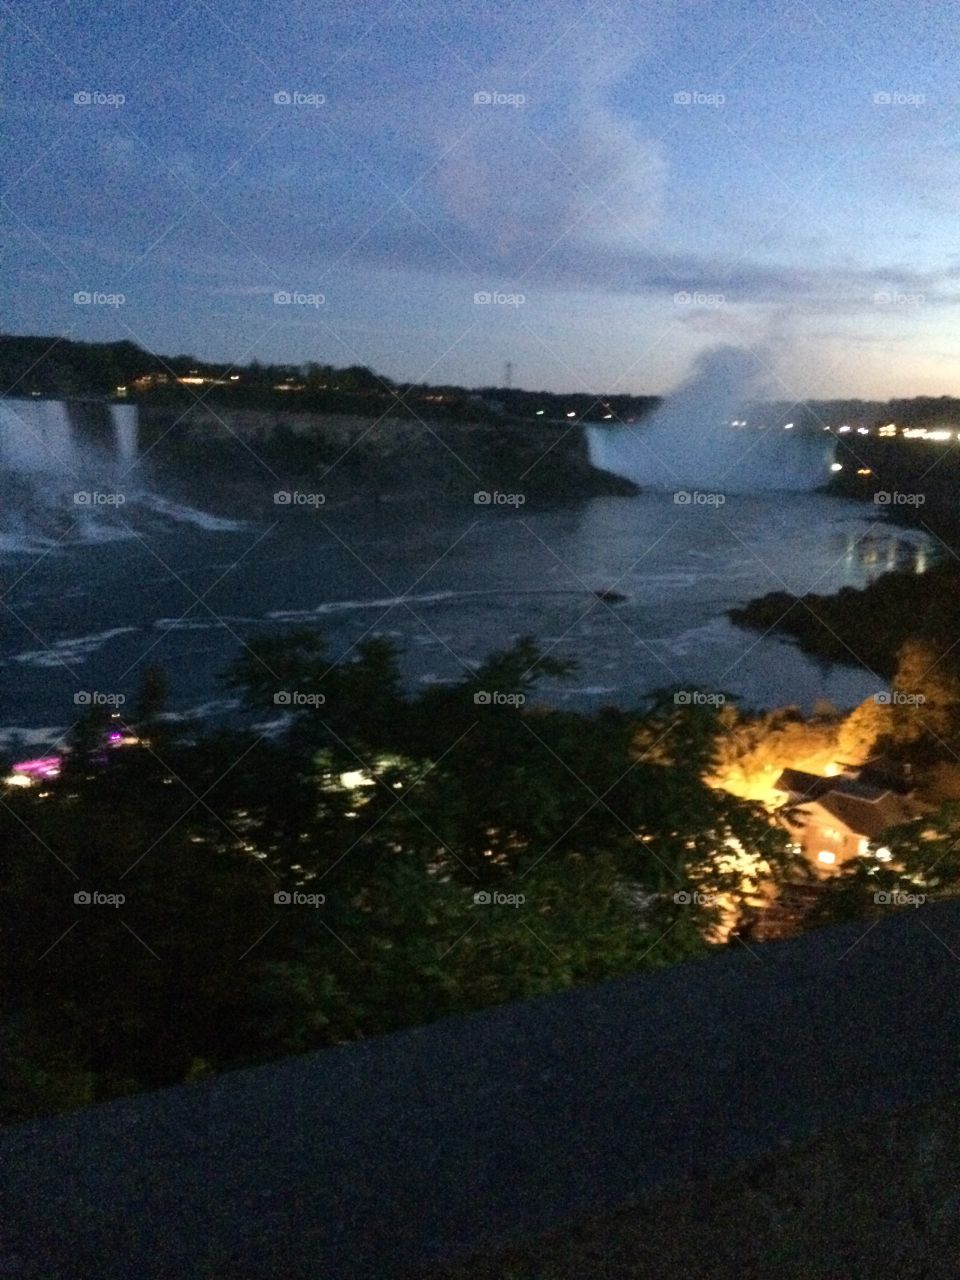 (Niagara) falls Niagara Falls